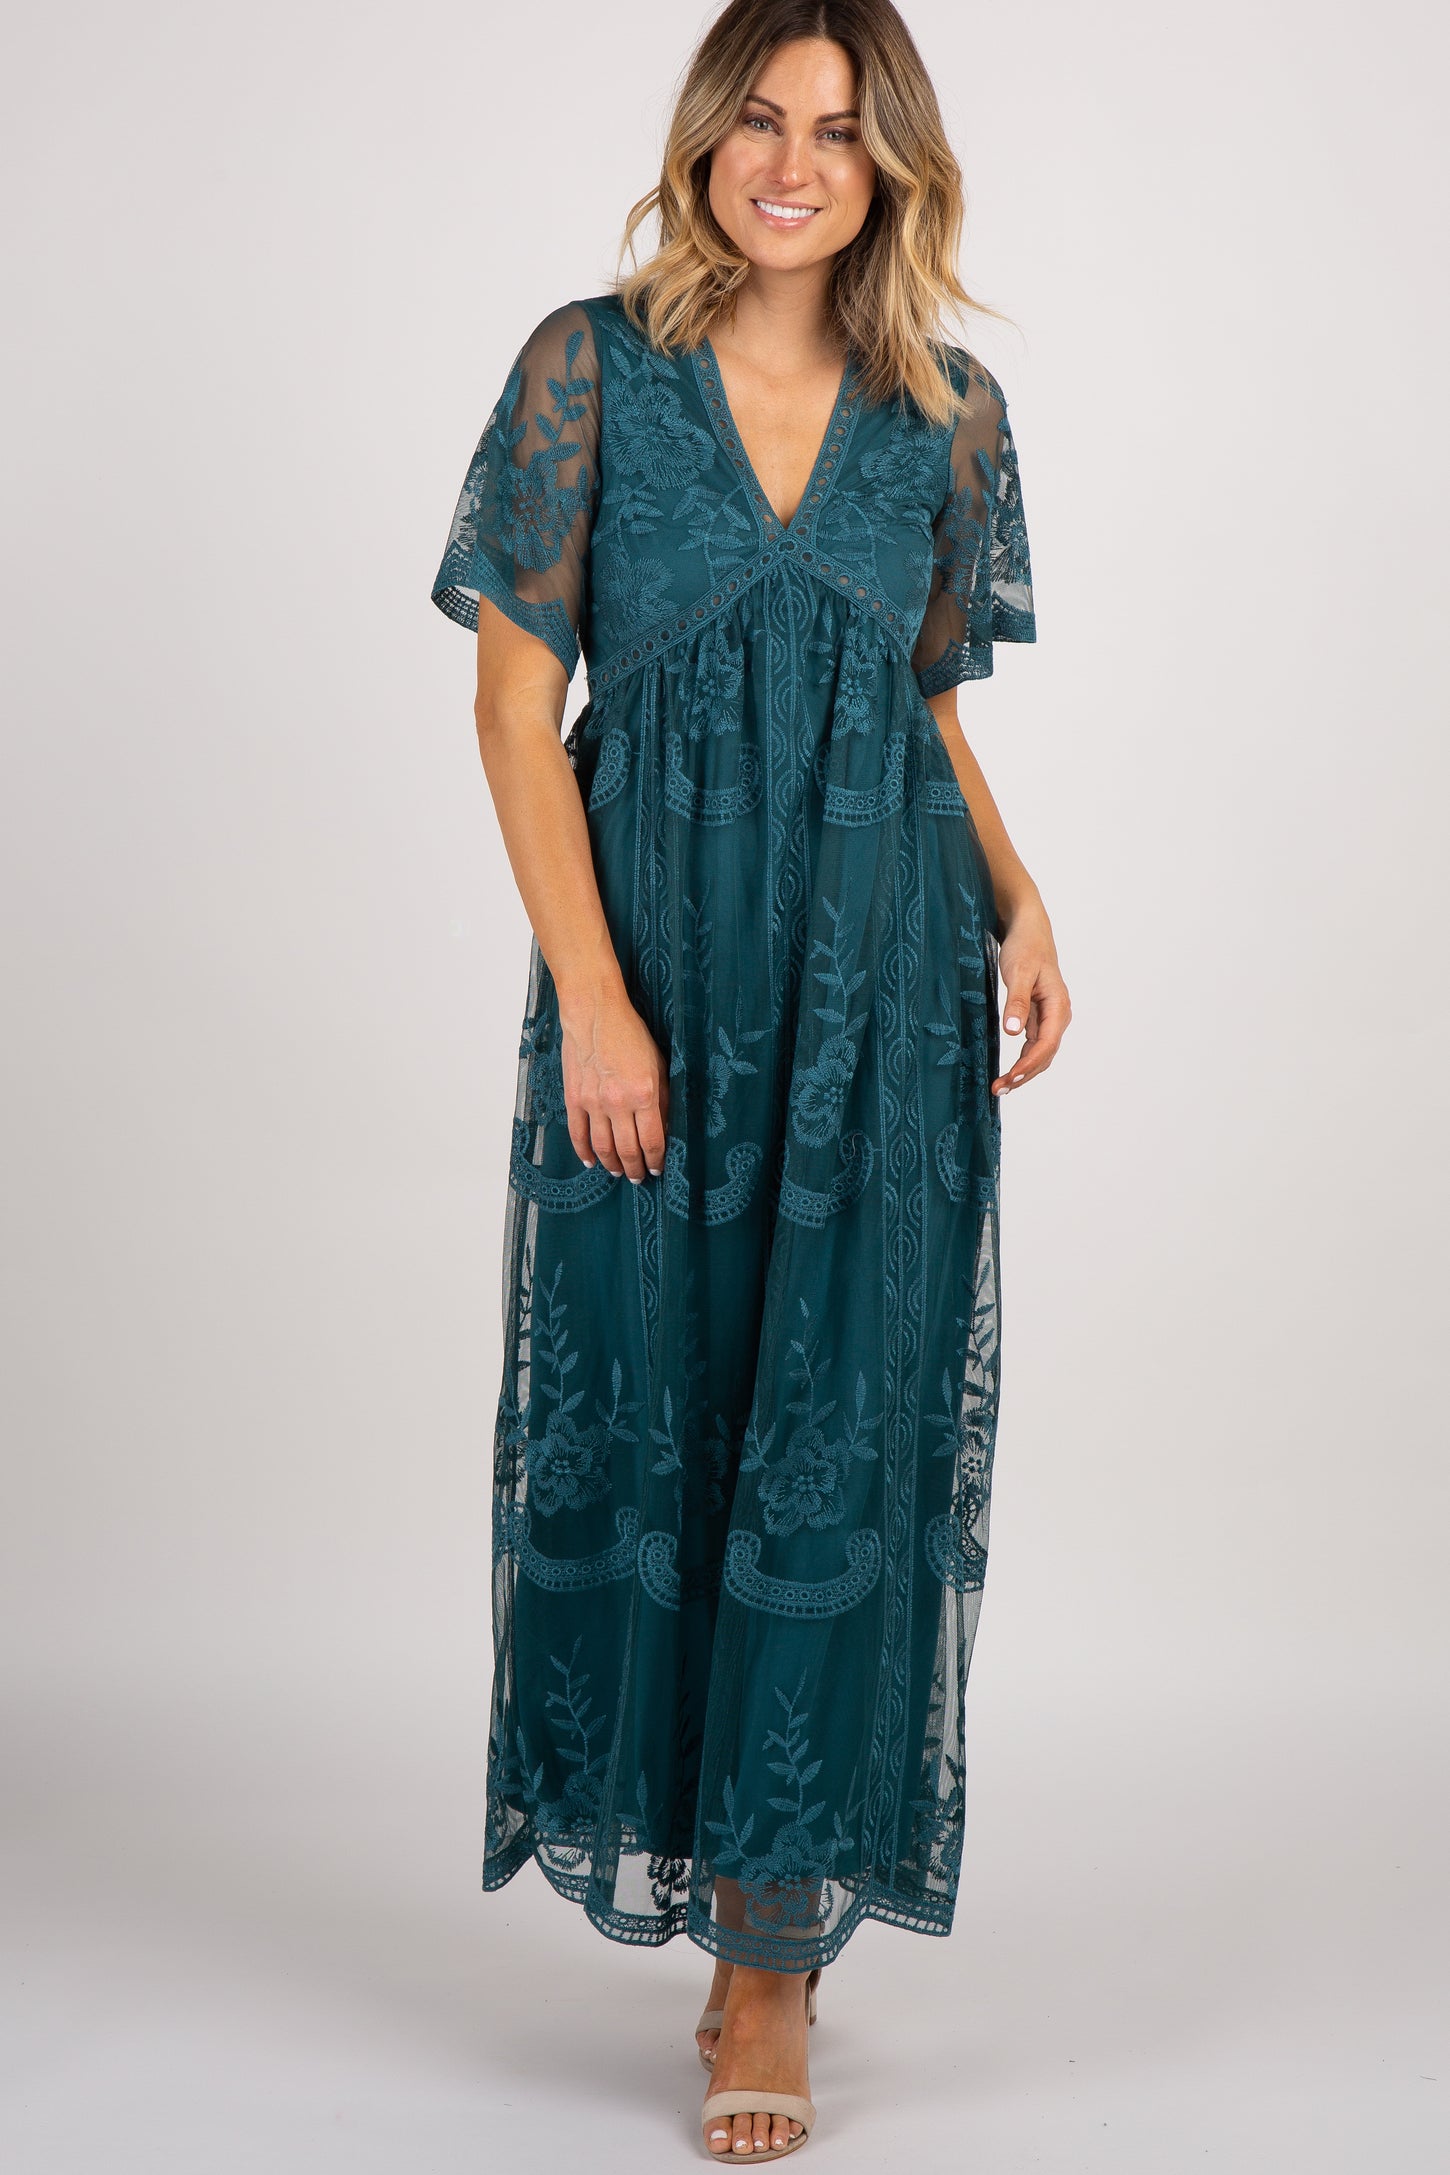 Dark Turquoise Lace Mesh Overlay Maternity Maxi Dress